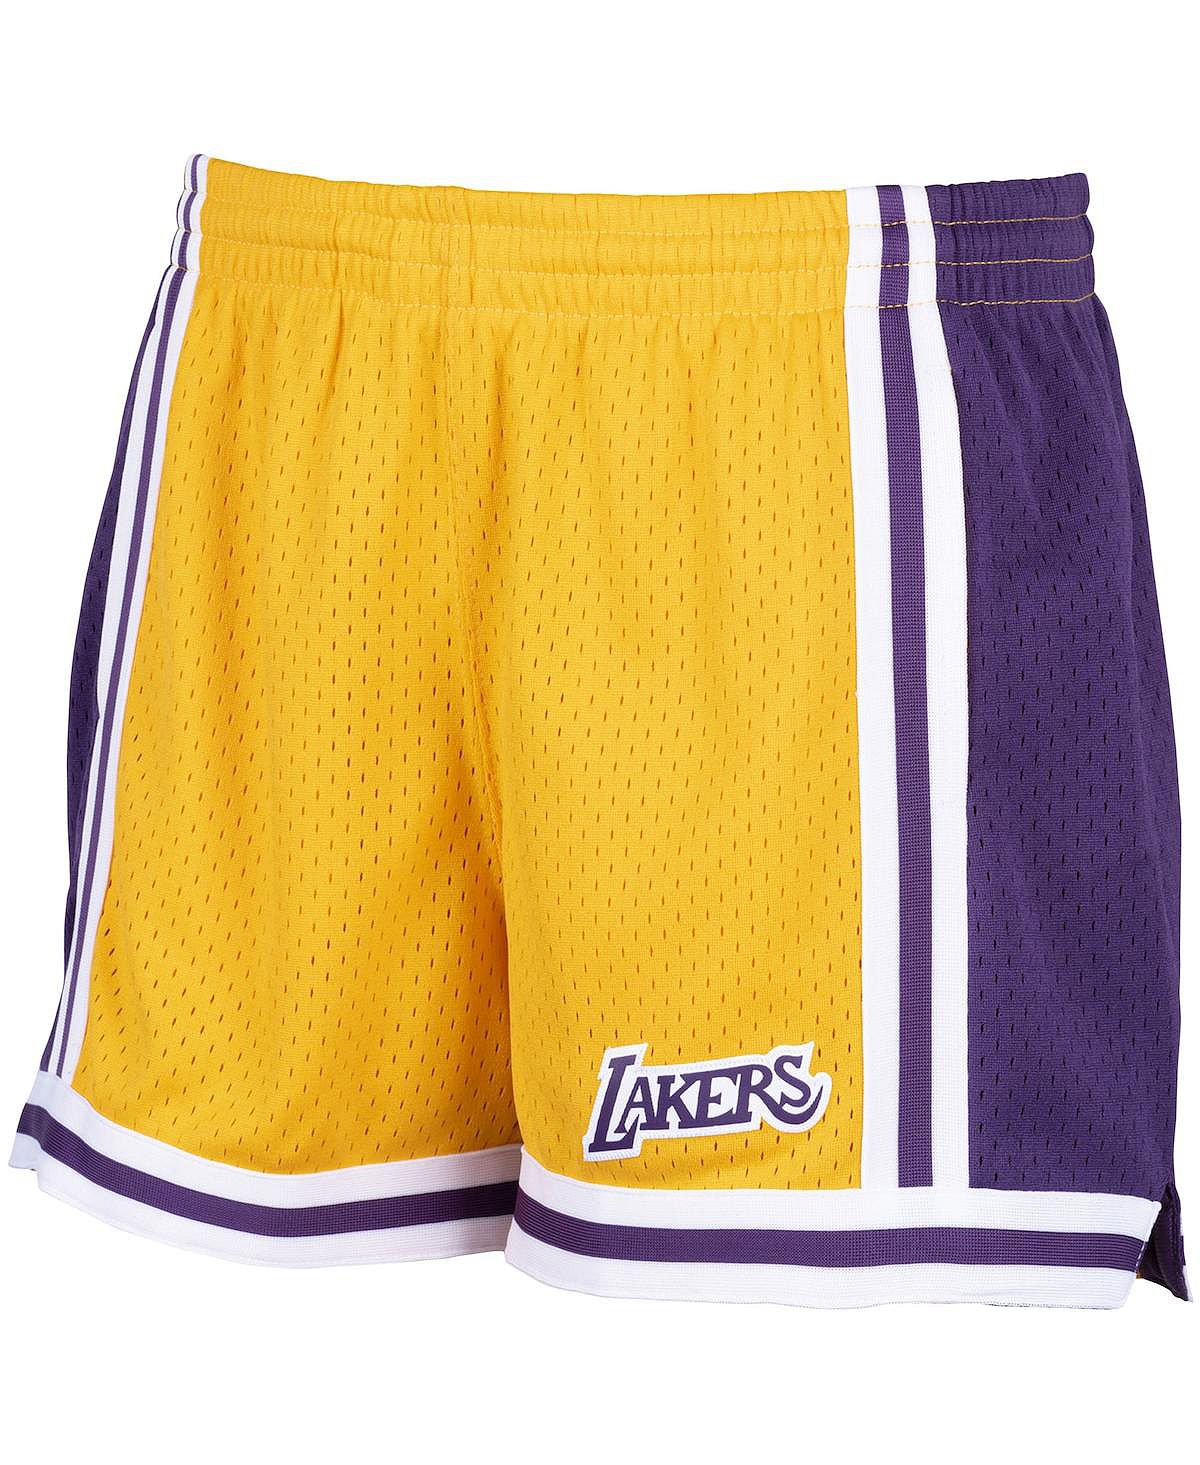 Шорты прыгать. Шорты Лейкерс. Los Angeles Lakers шорты. Штаны Лейкерс спортивные мужские. Шорты Lakers желтый с фиолетовым.